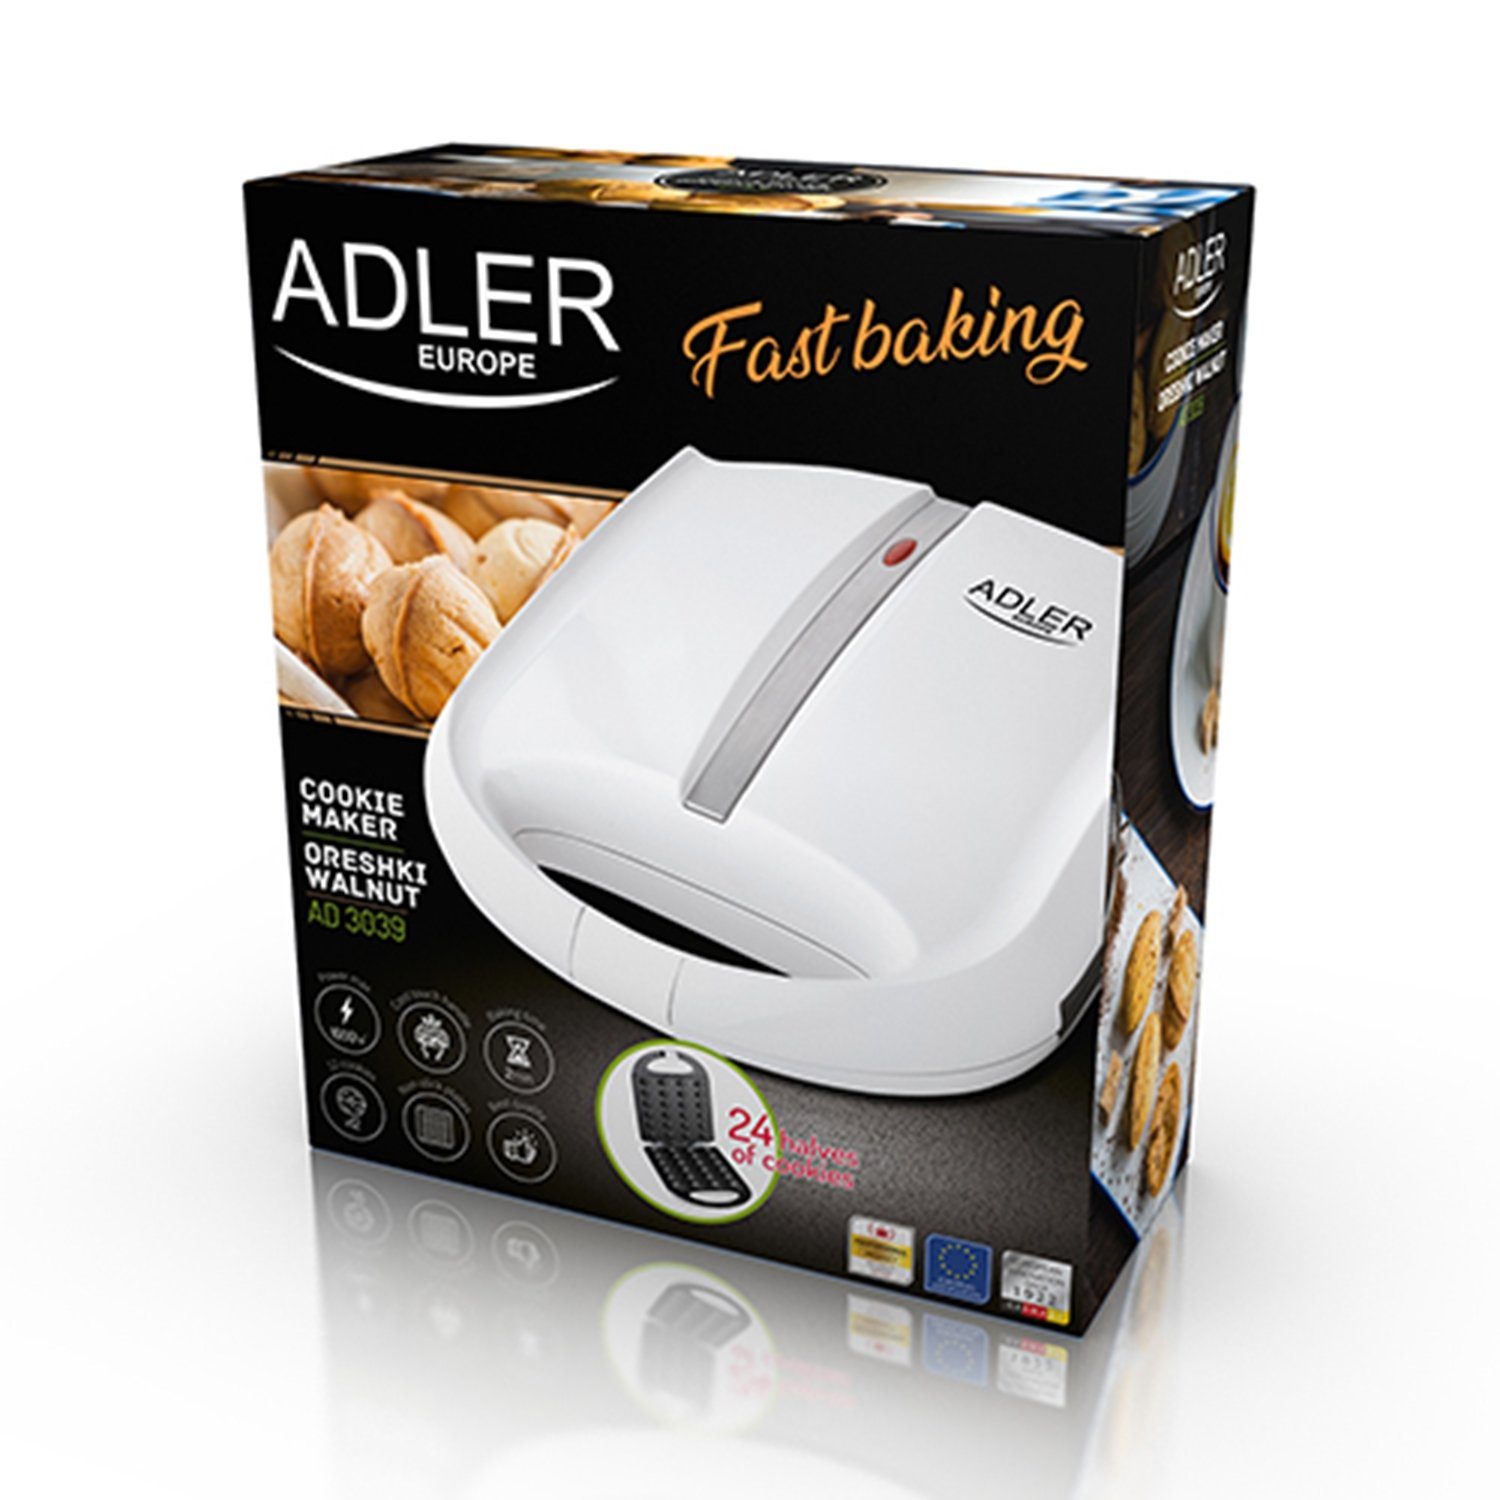 AD Toaster 3039, Toaster Haselnüsse Erdnüsse Adler Nüsse 24 Stk. für